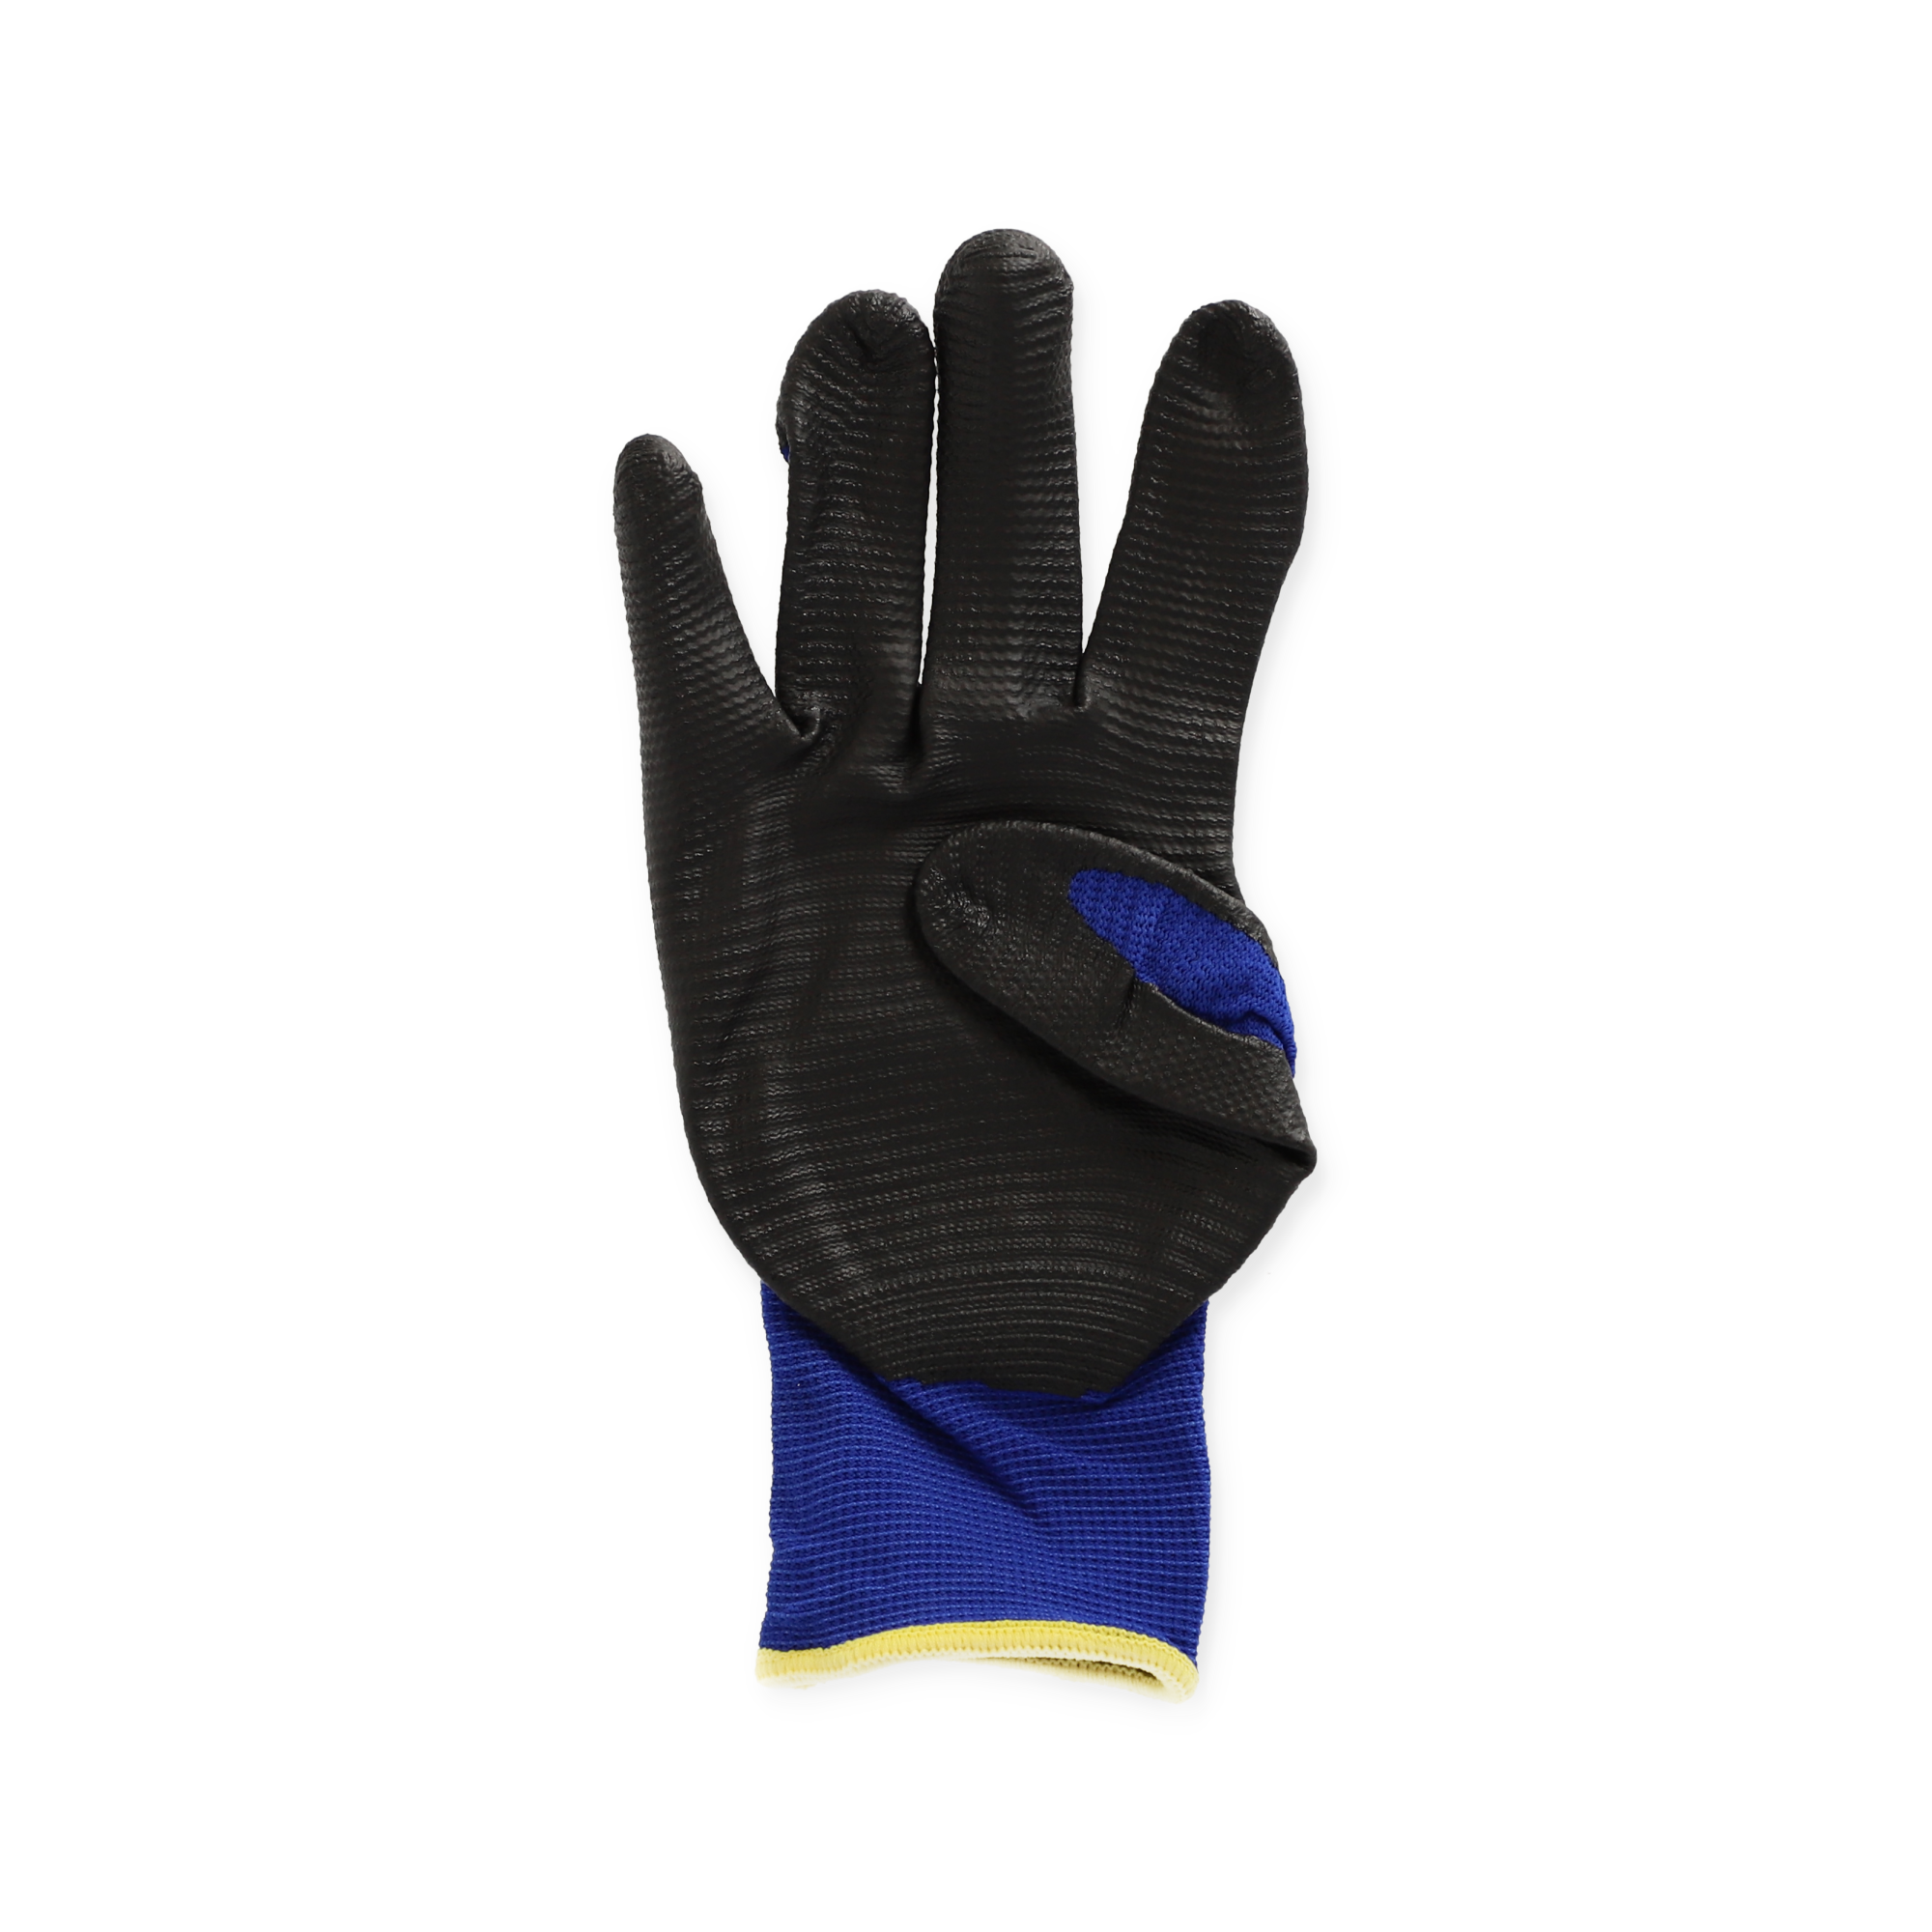 Handschuhe 'Super Grip' blau Gr. 9 + product picture